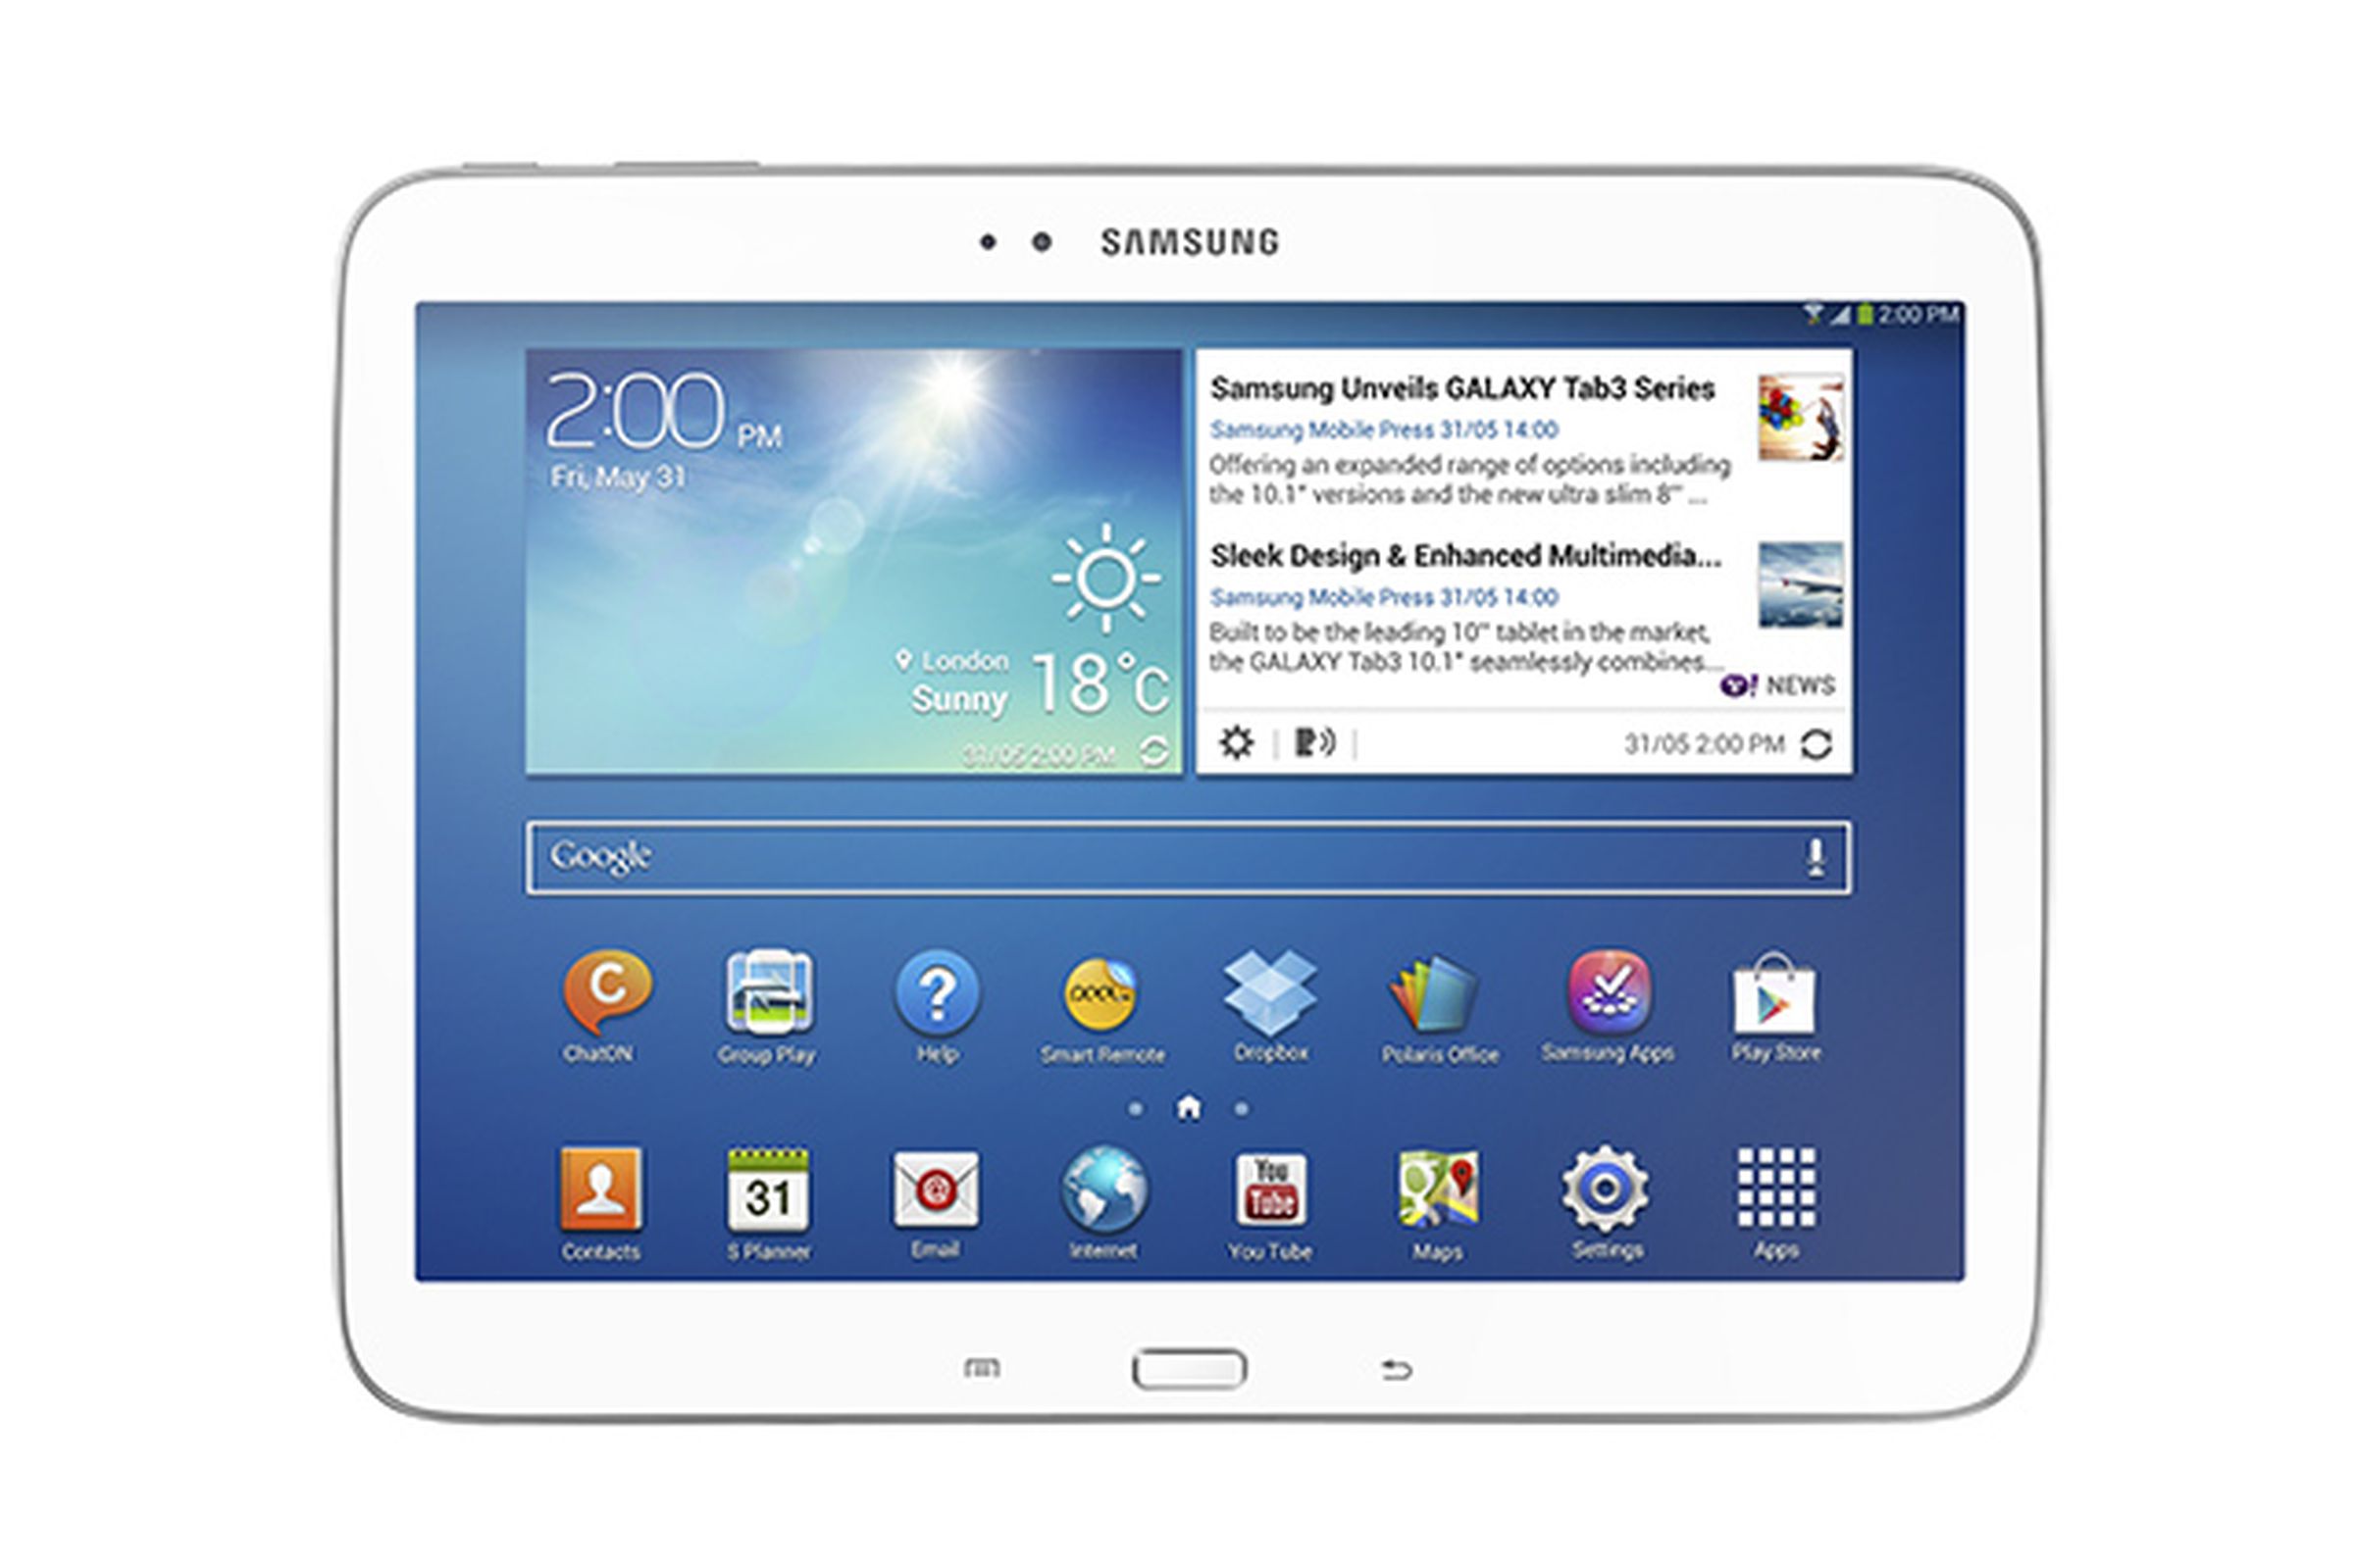 Samsung Galaxy Tab 3 8.0 and 10.1 press images